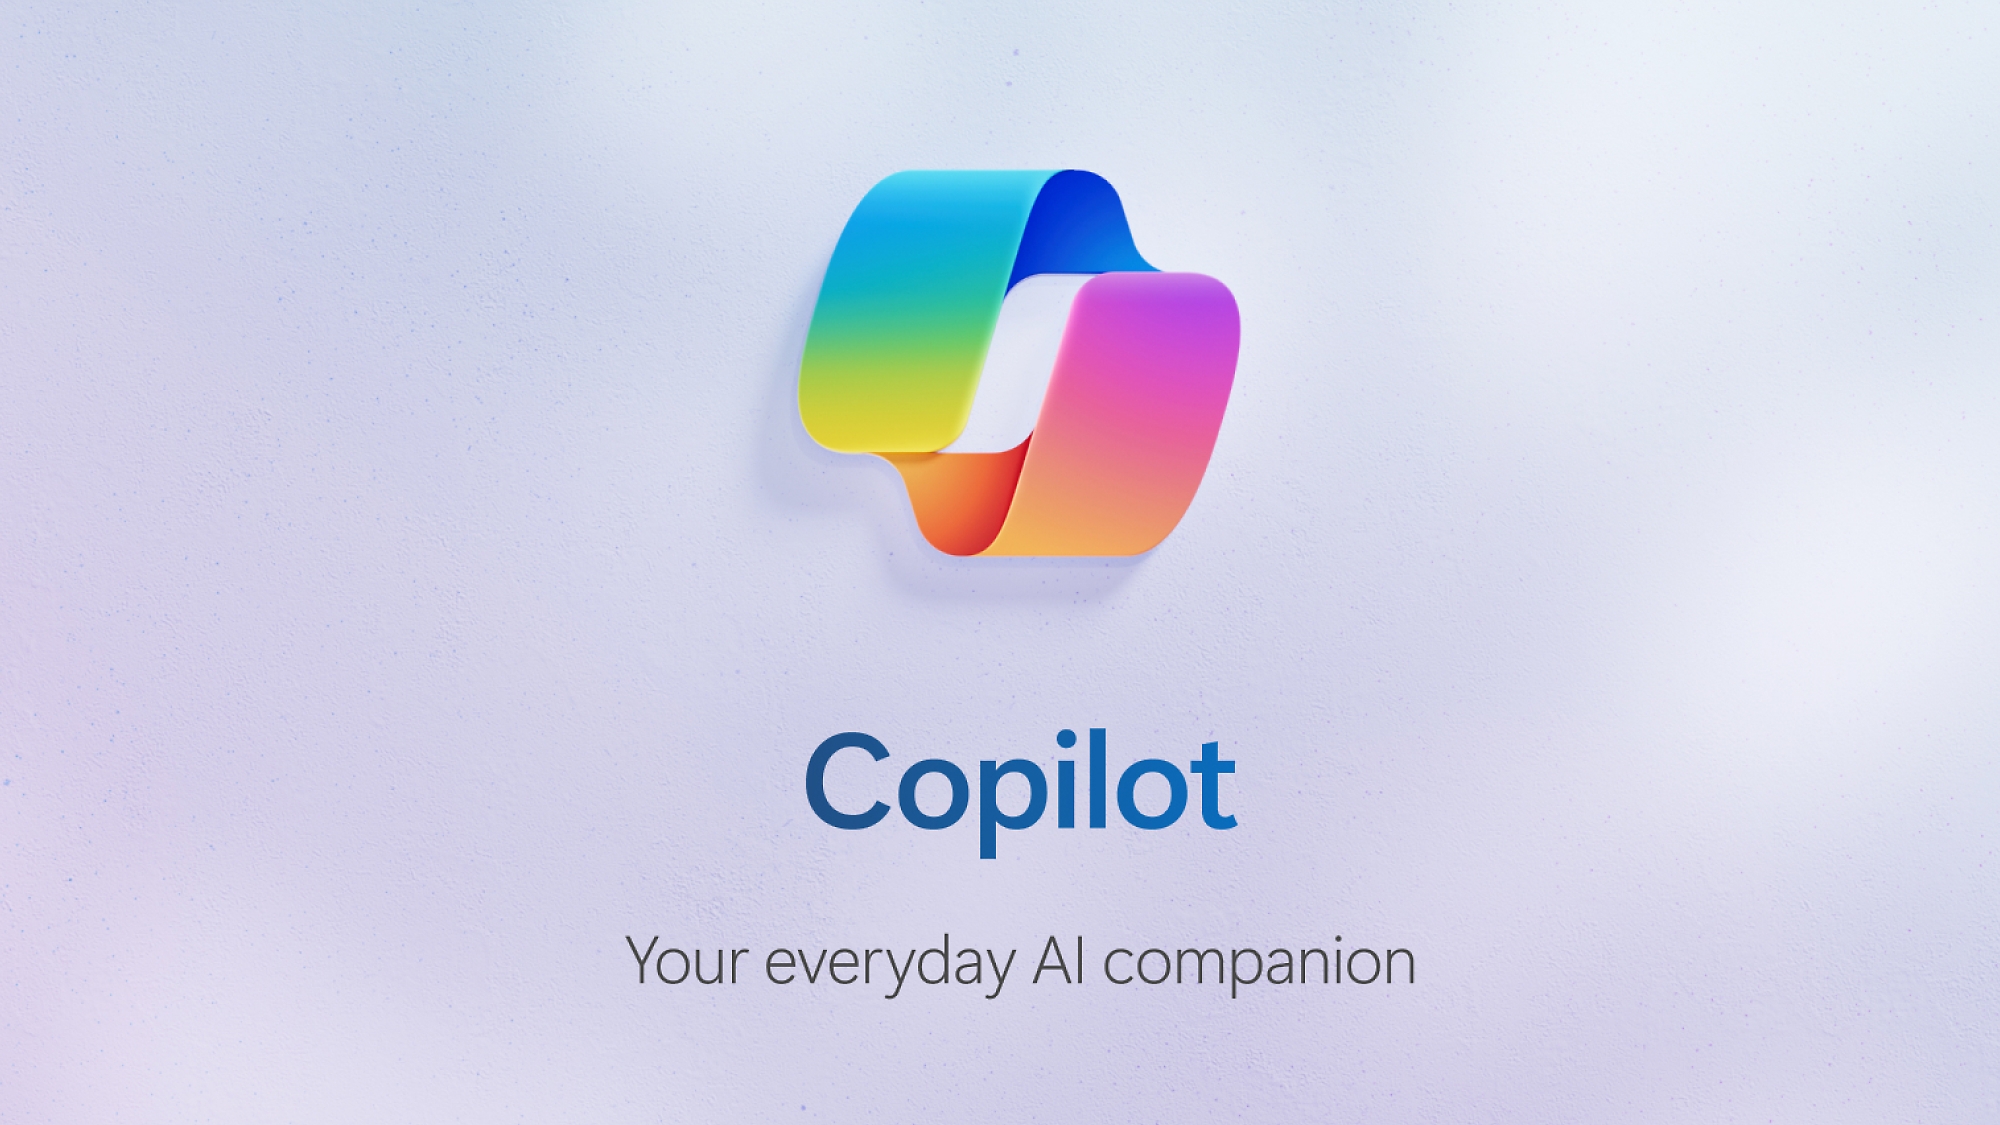 Miniatura wideo o funkcji Copilot z logo funkcji Copilot